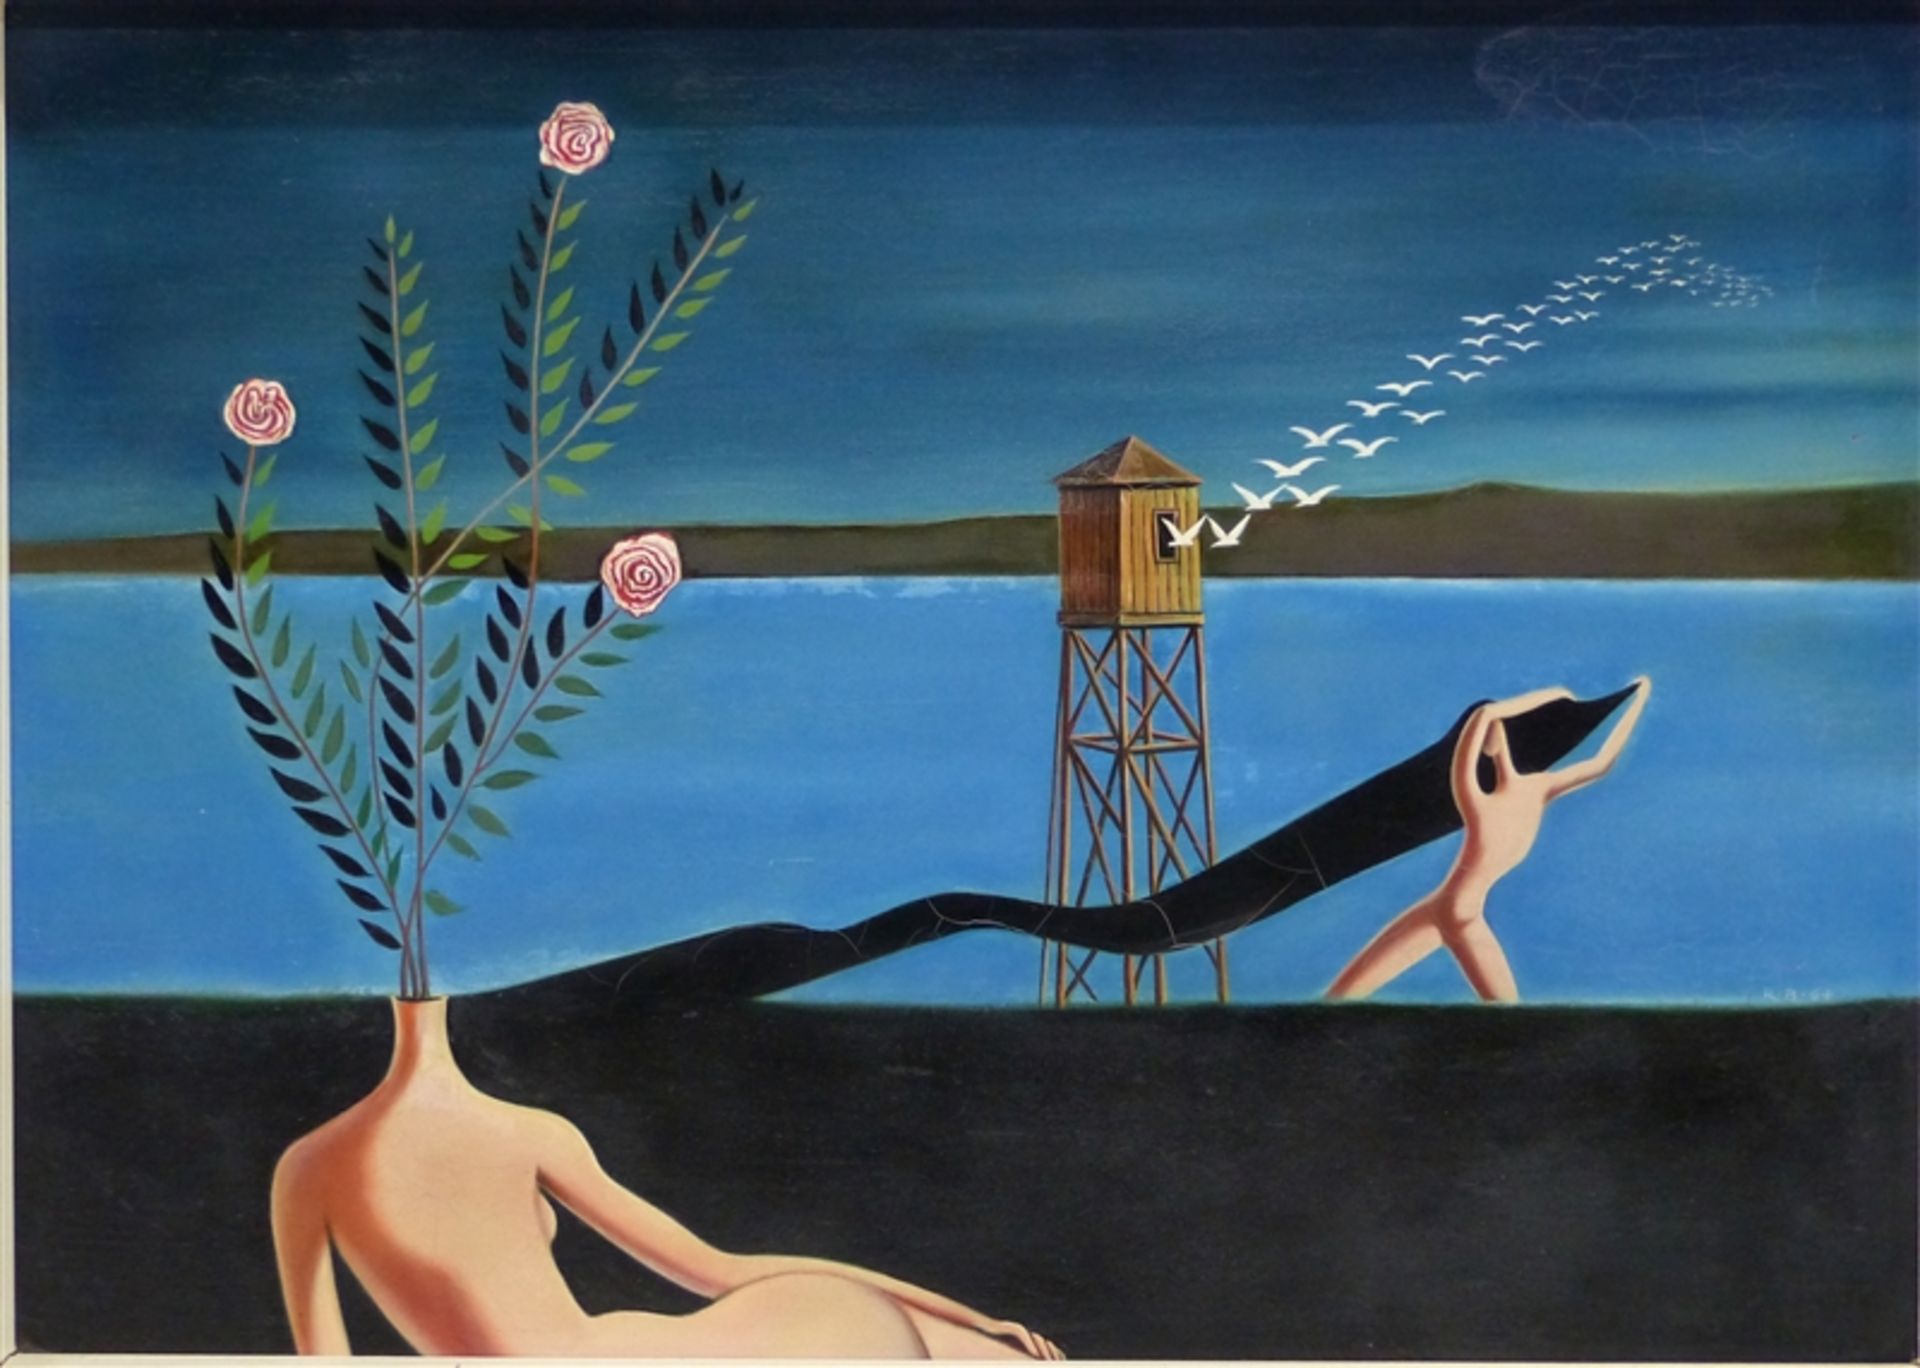 Böck, Rolf 20. Jh., Öl auf Malerpappe, Surreales Motiv, "Umzug ins Vergessen", 1964, 24,5 x 33,5 cm,